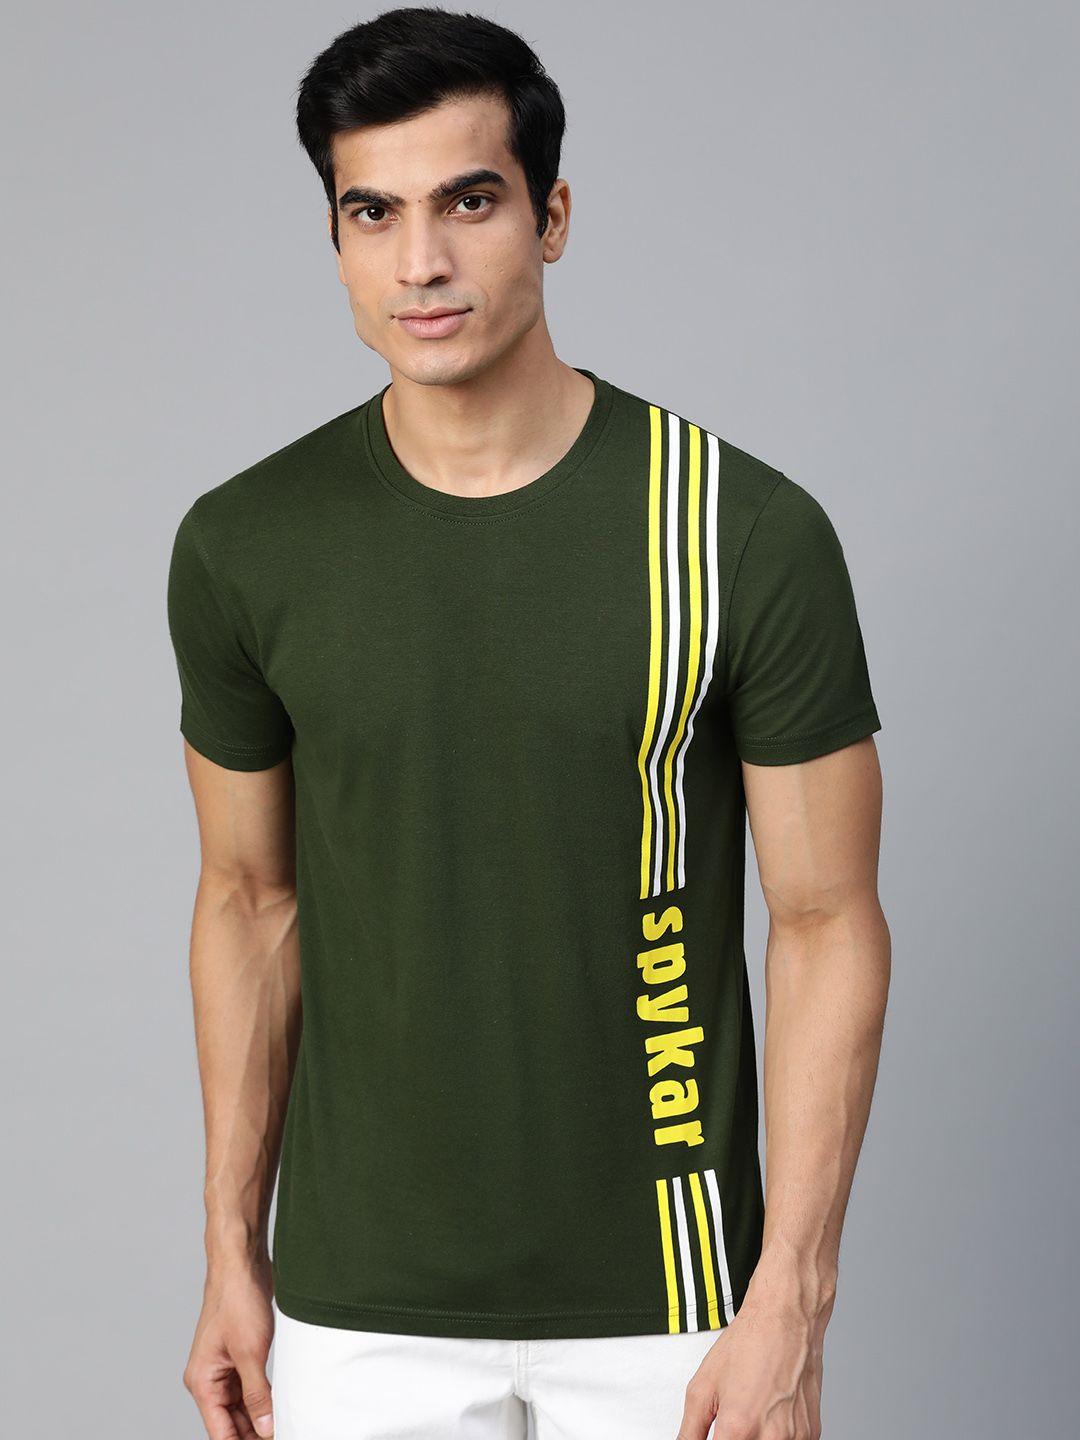 underjeans by spykar men olive green striped detail round neck t-shirt